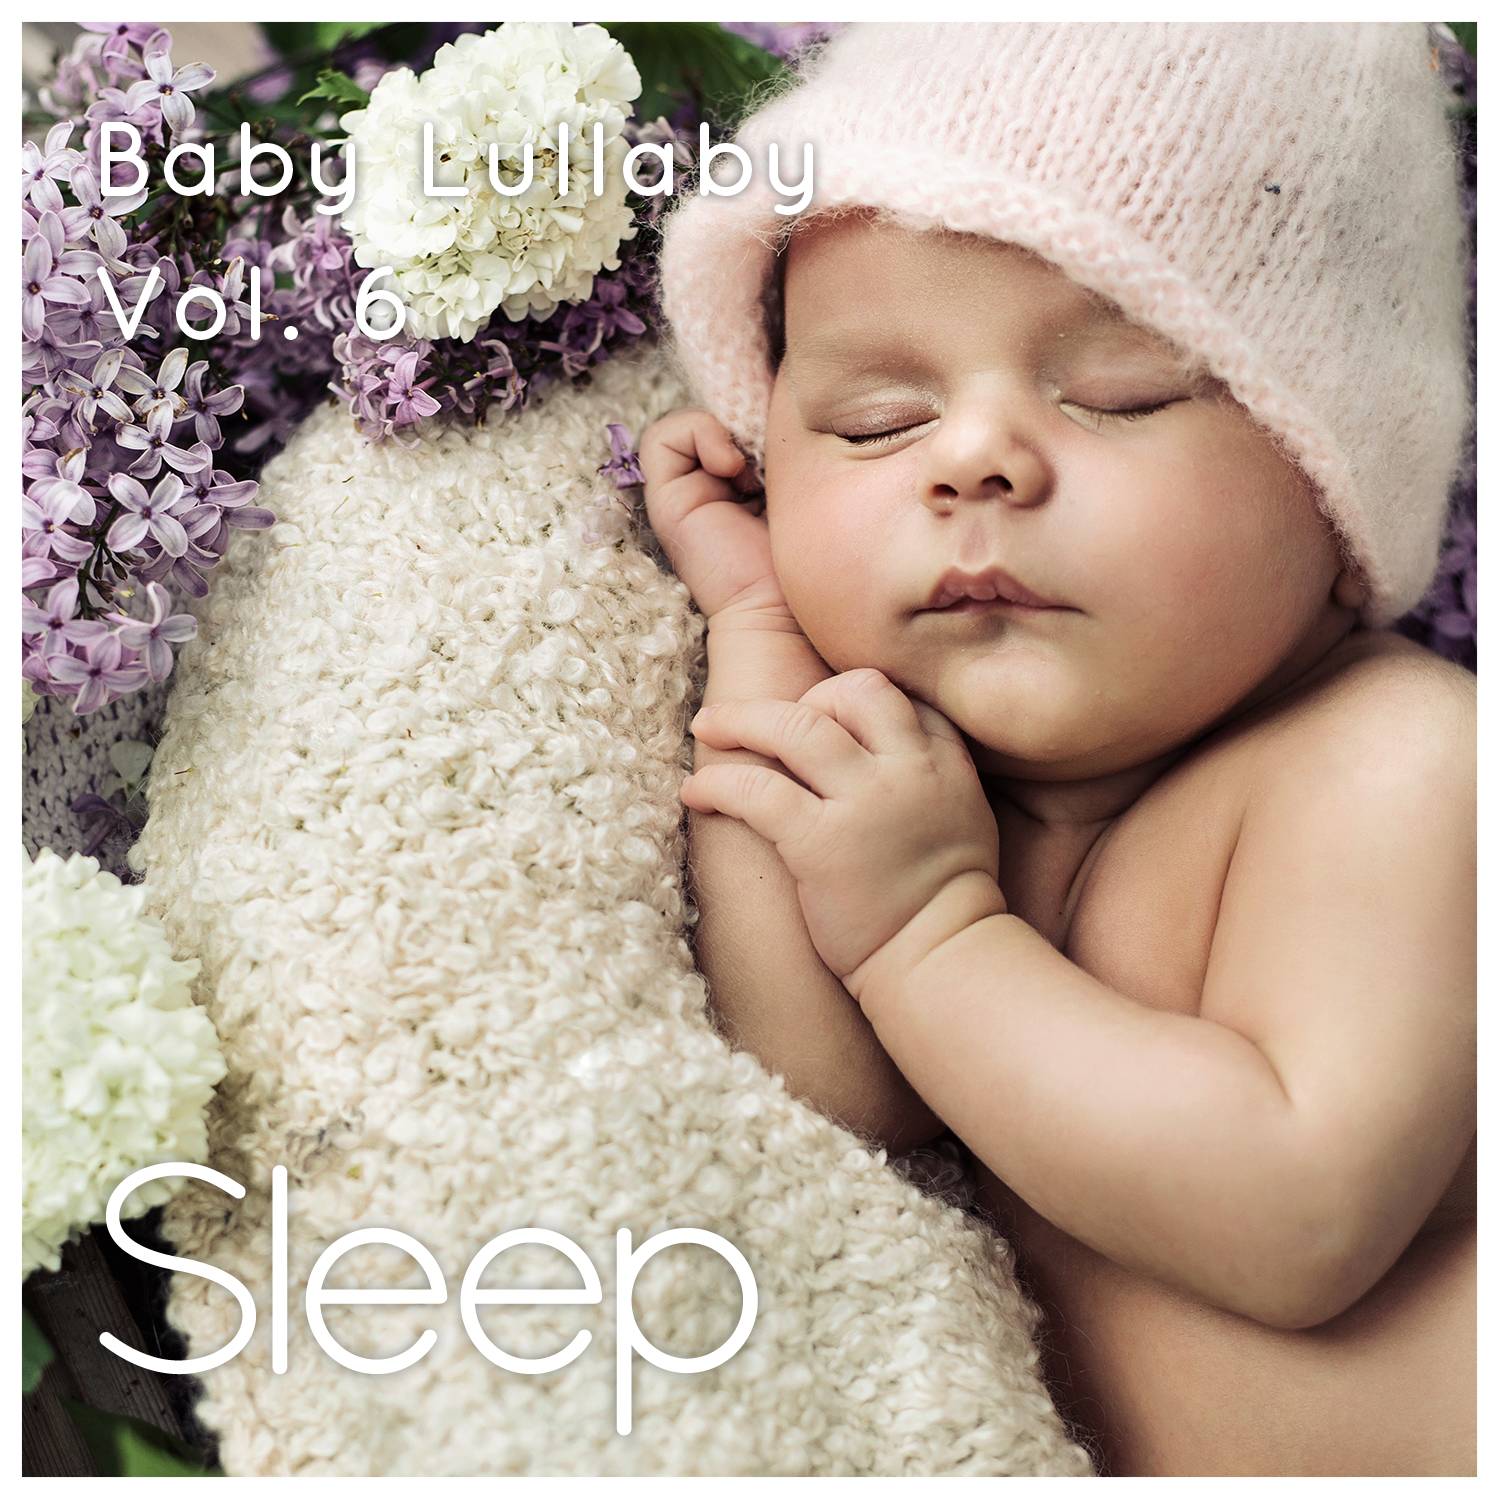 Baby Sleep - The Tumble Dryer Lullaby, Vol. 6